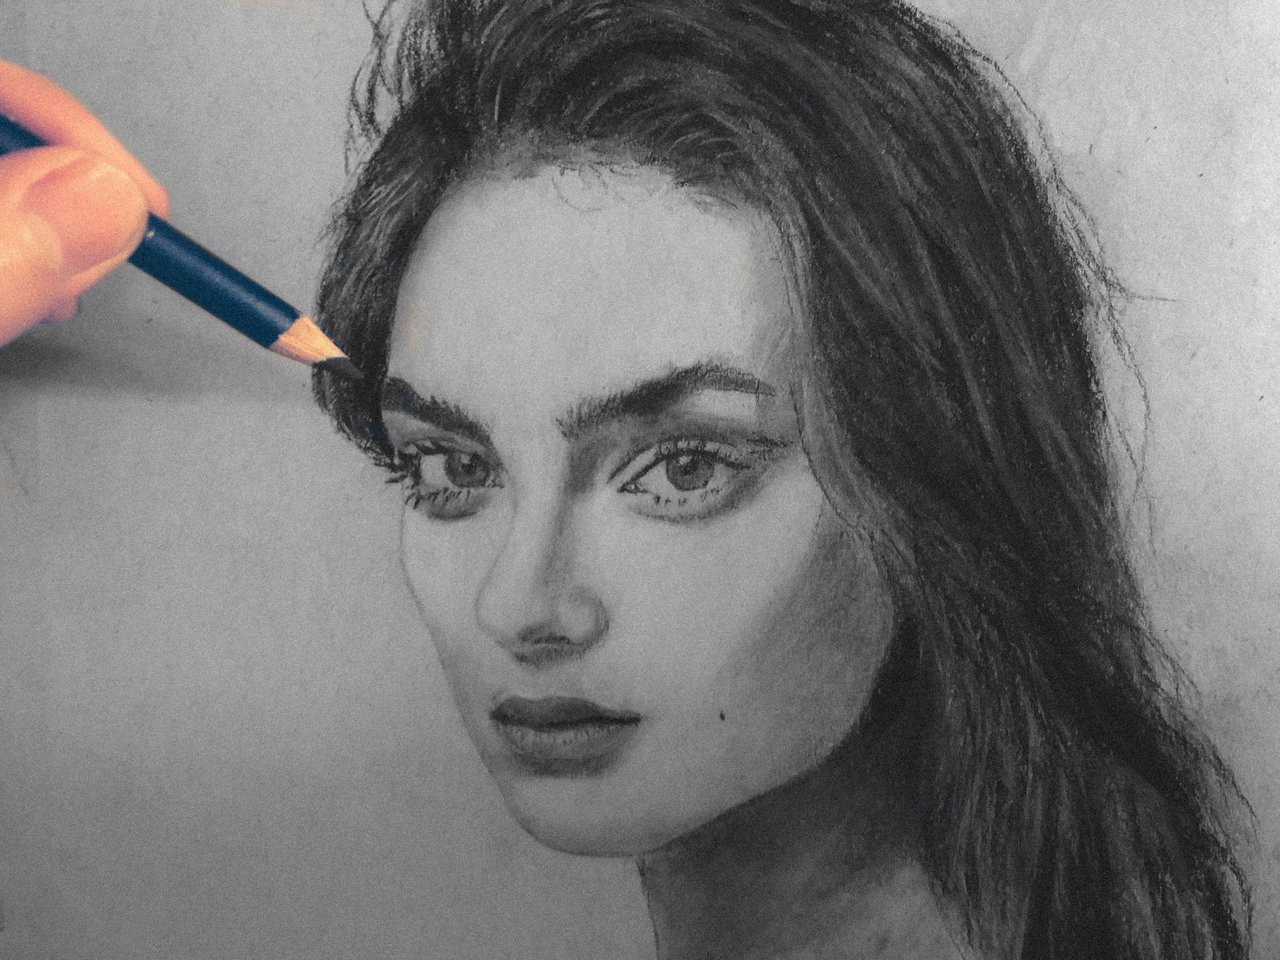 The Artman on Twitter Mirror girl realistic pencil portrait   YouTube videohttpstcoAnygzIHyVz girl drawing sketch YouTube art  portrait httpstcoP0cAXbUBQi  X